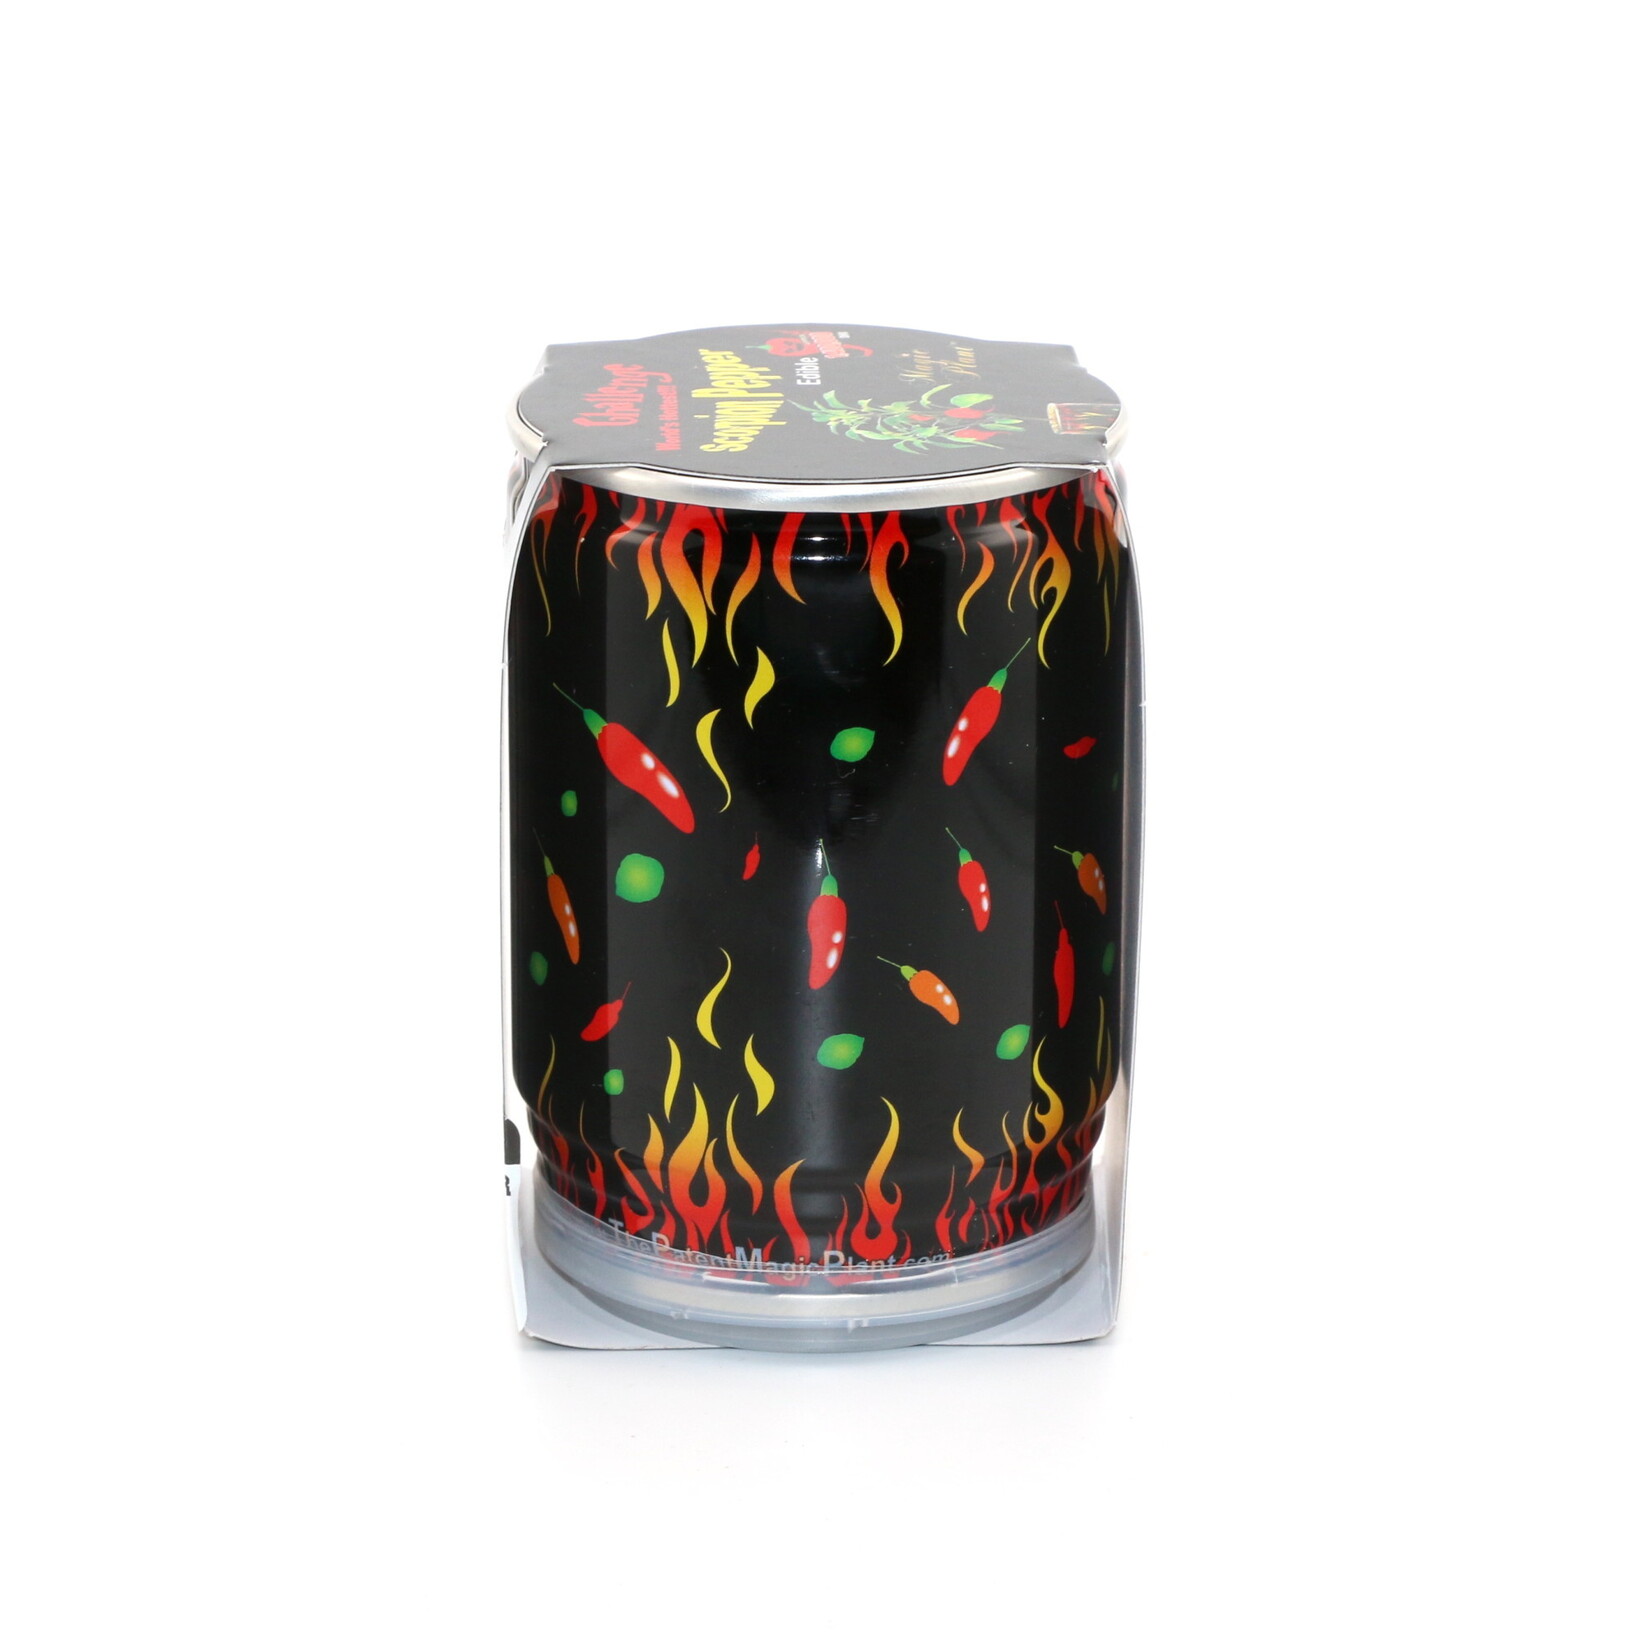 Scorpion Pepper Growing Kit